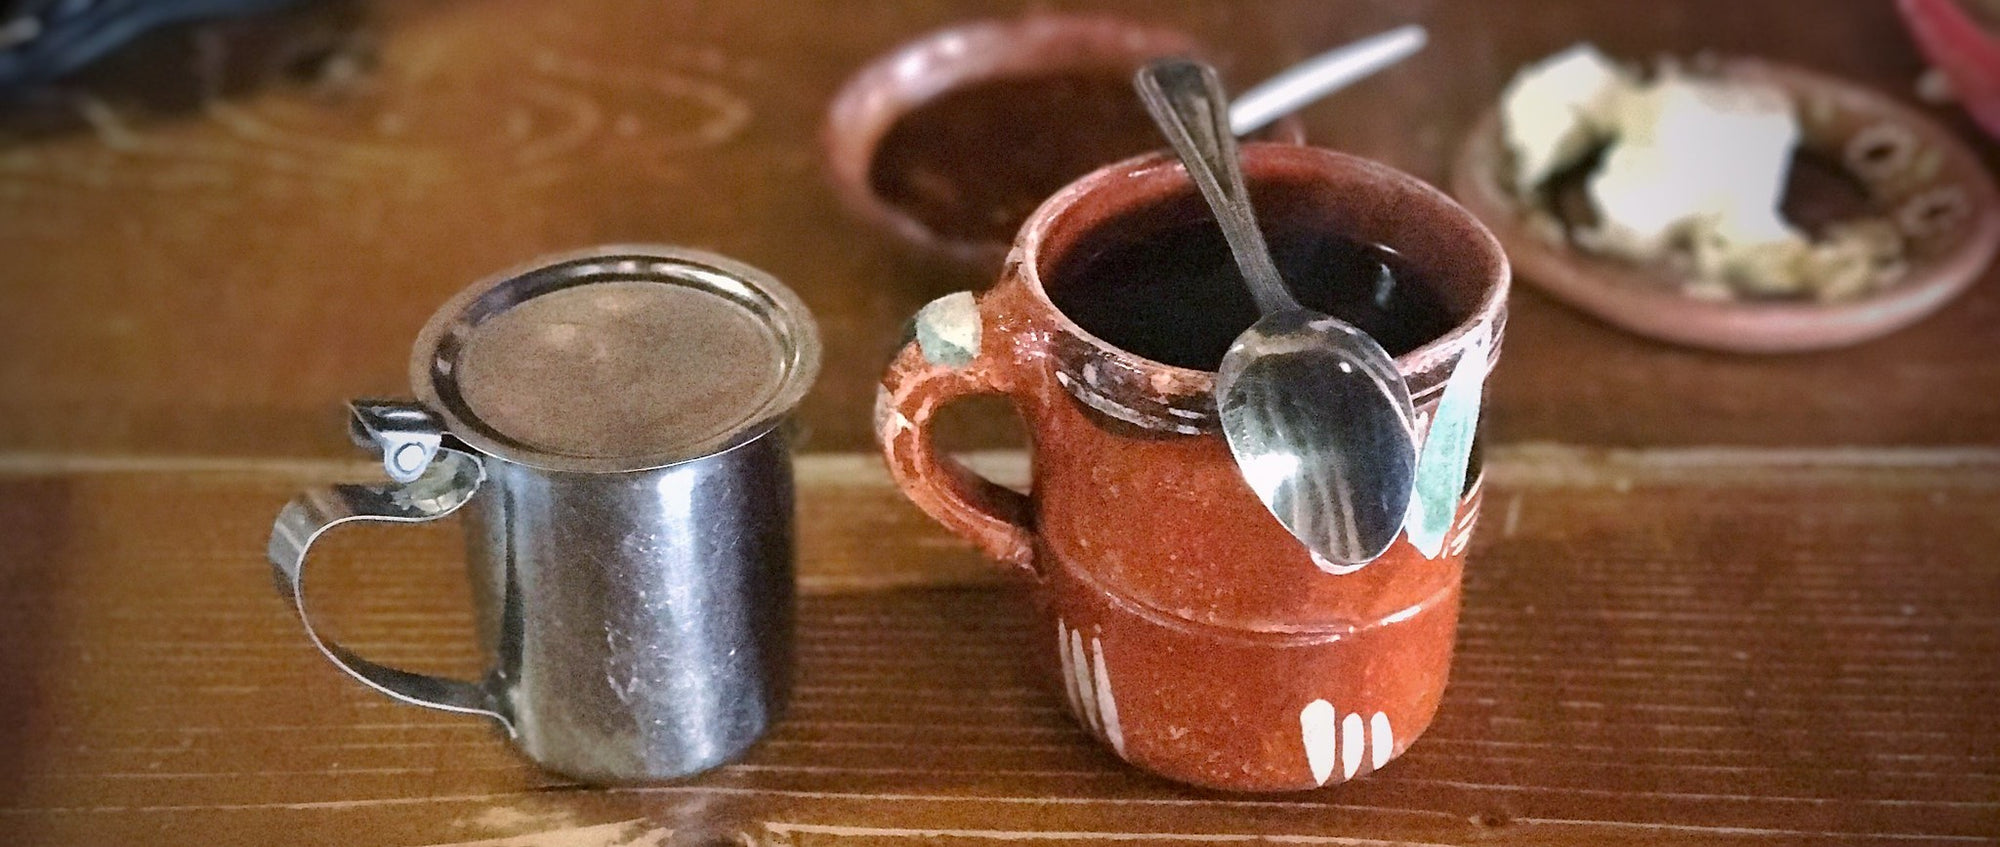 Coffee in Mexico: A Brief History